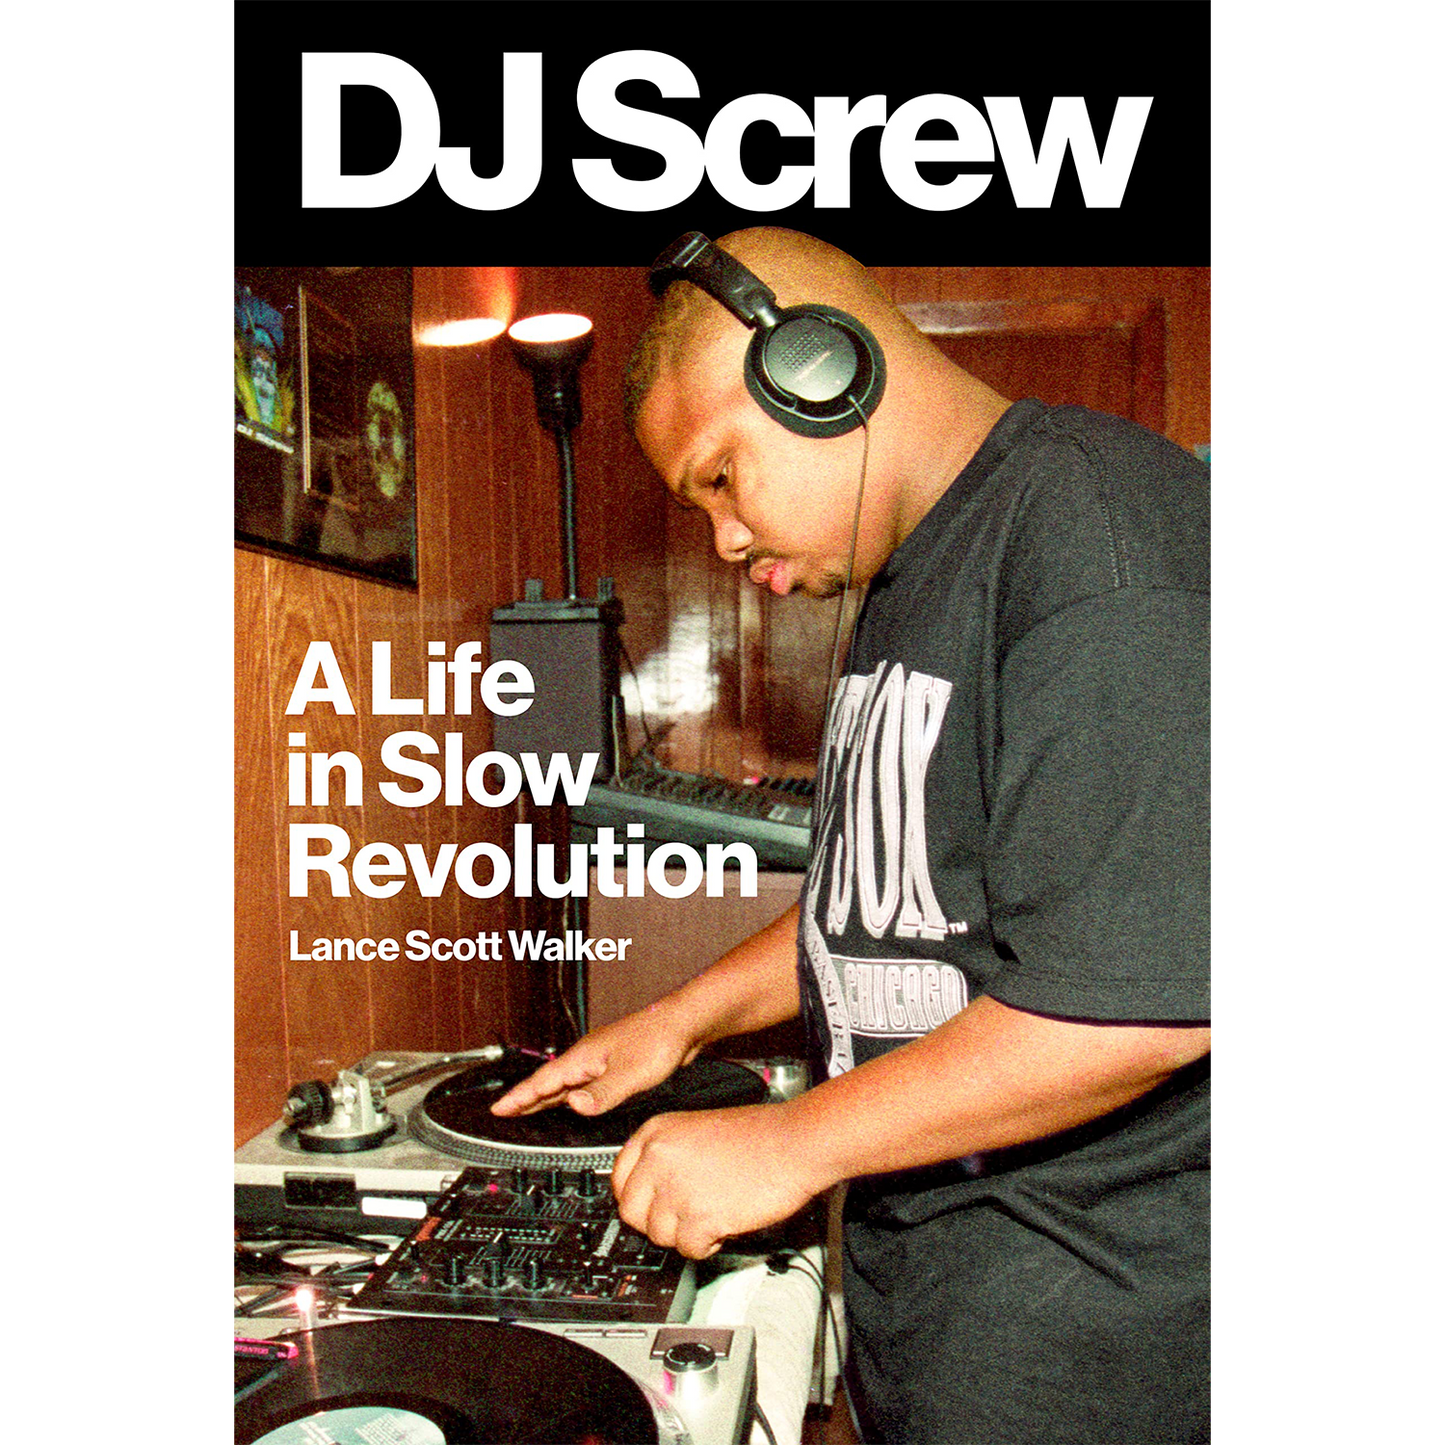 DJ Screw: A Life in Slow Revolution (American Music Series)